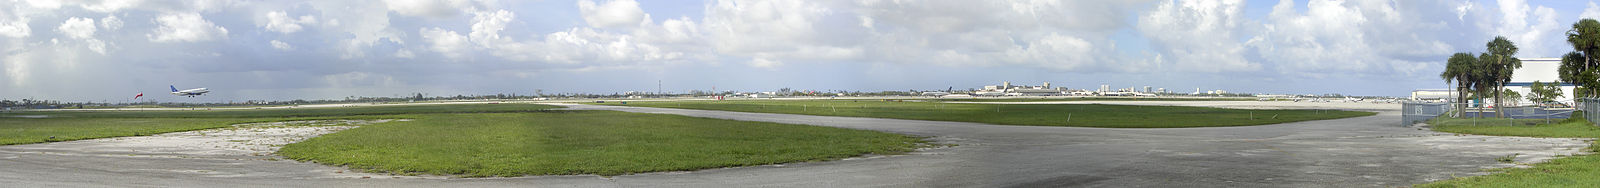 St. Louis Lambert International Airport - Wikipedia